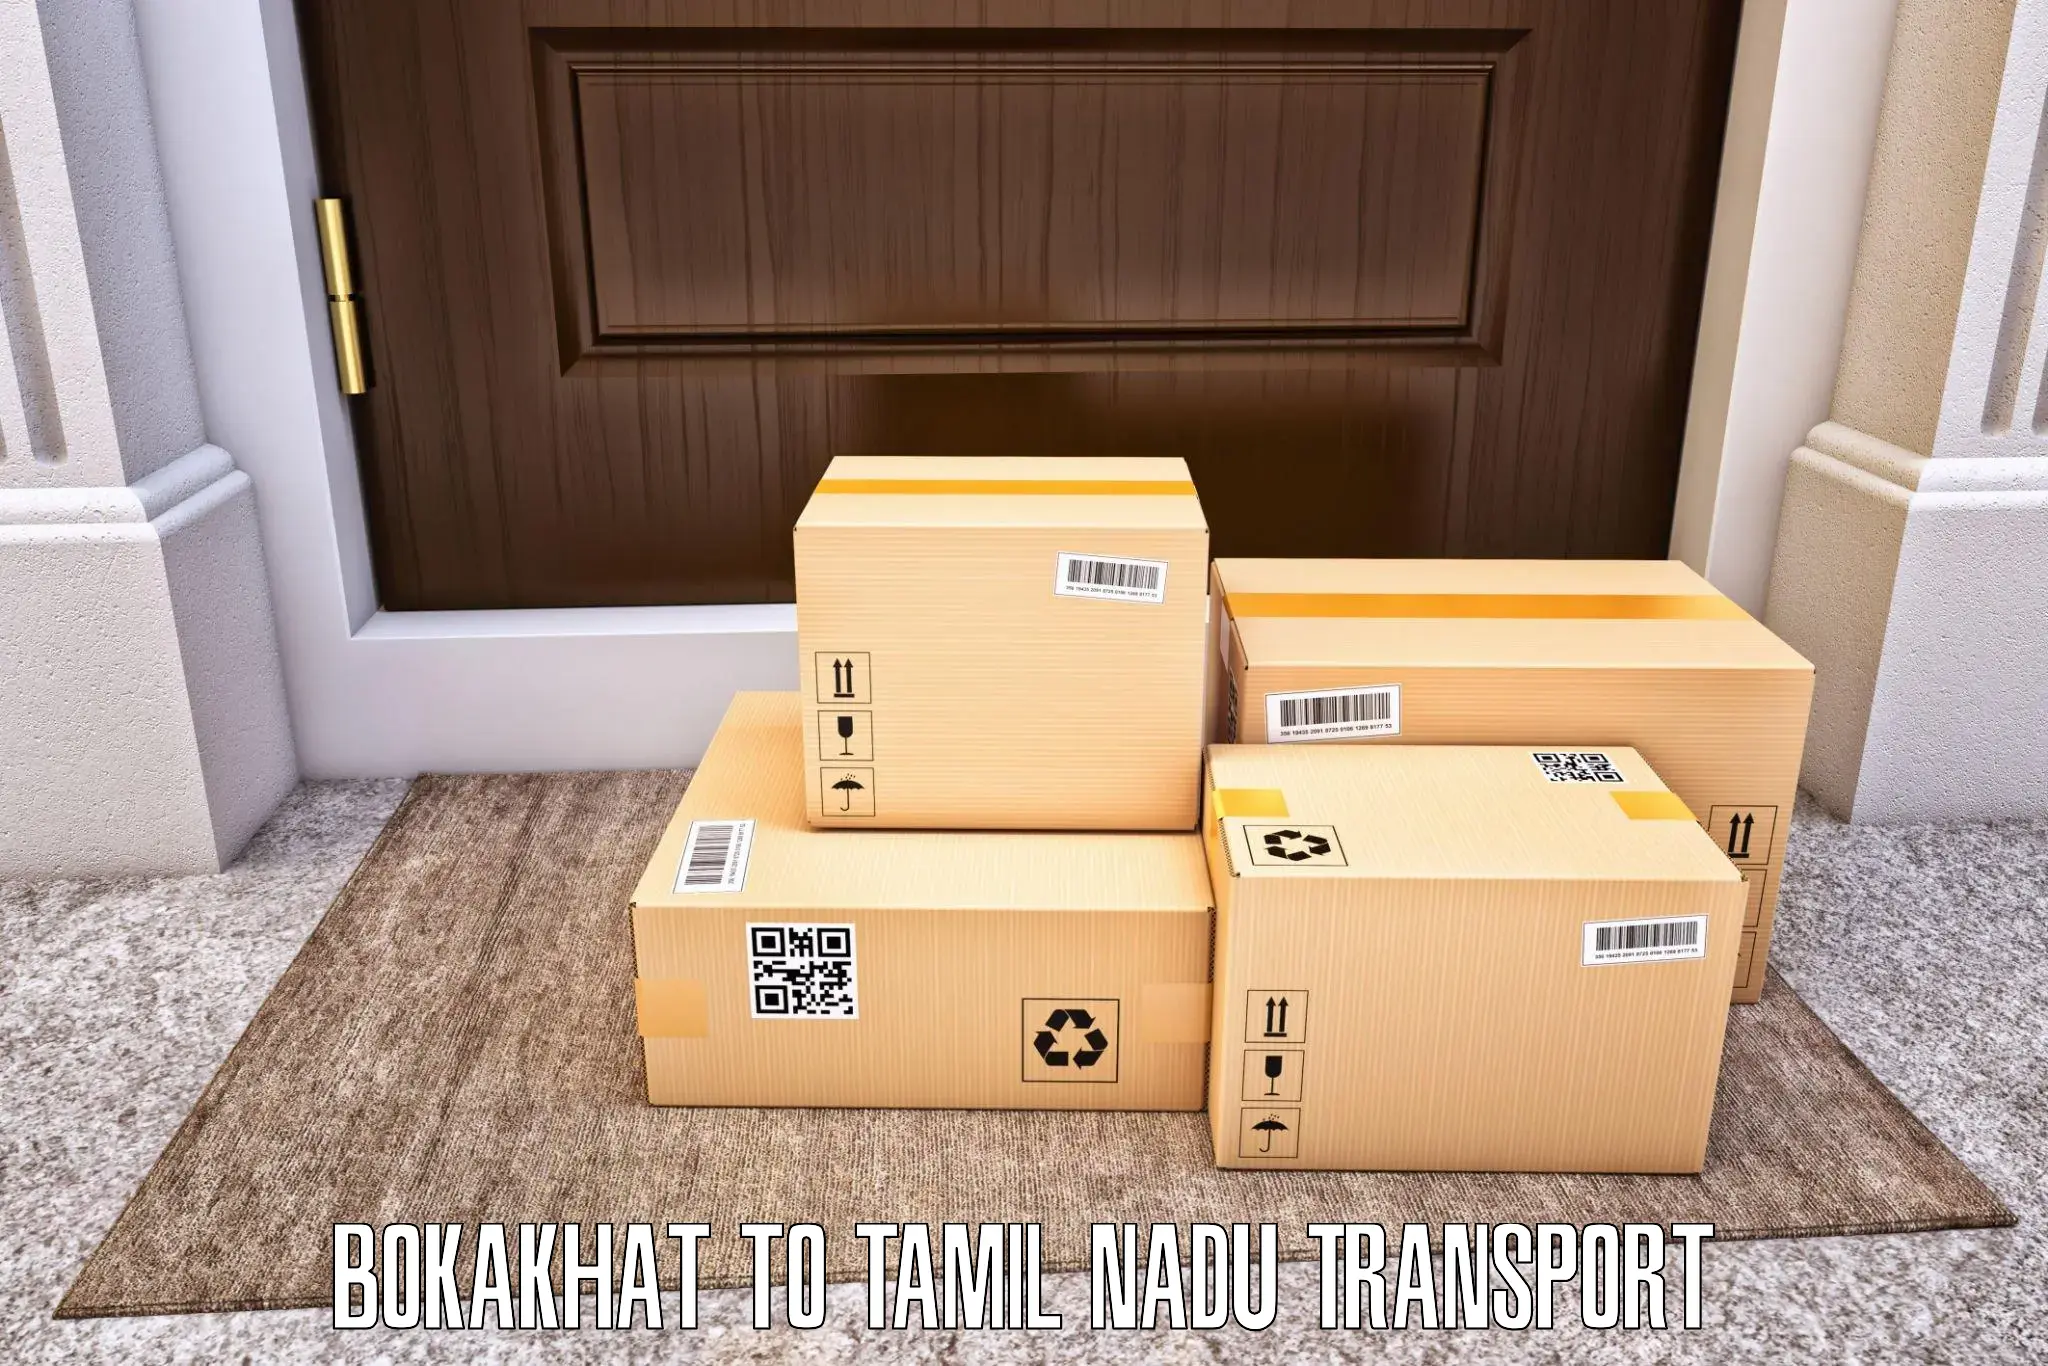 Lorry transport service Bokakhat to Cuddalore